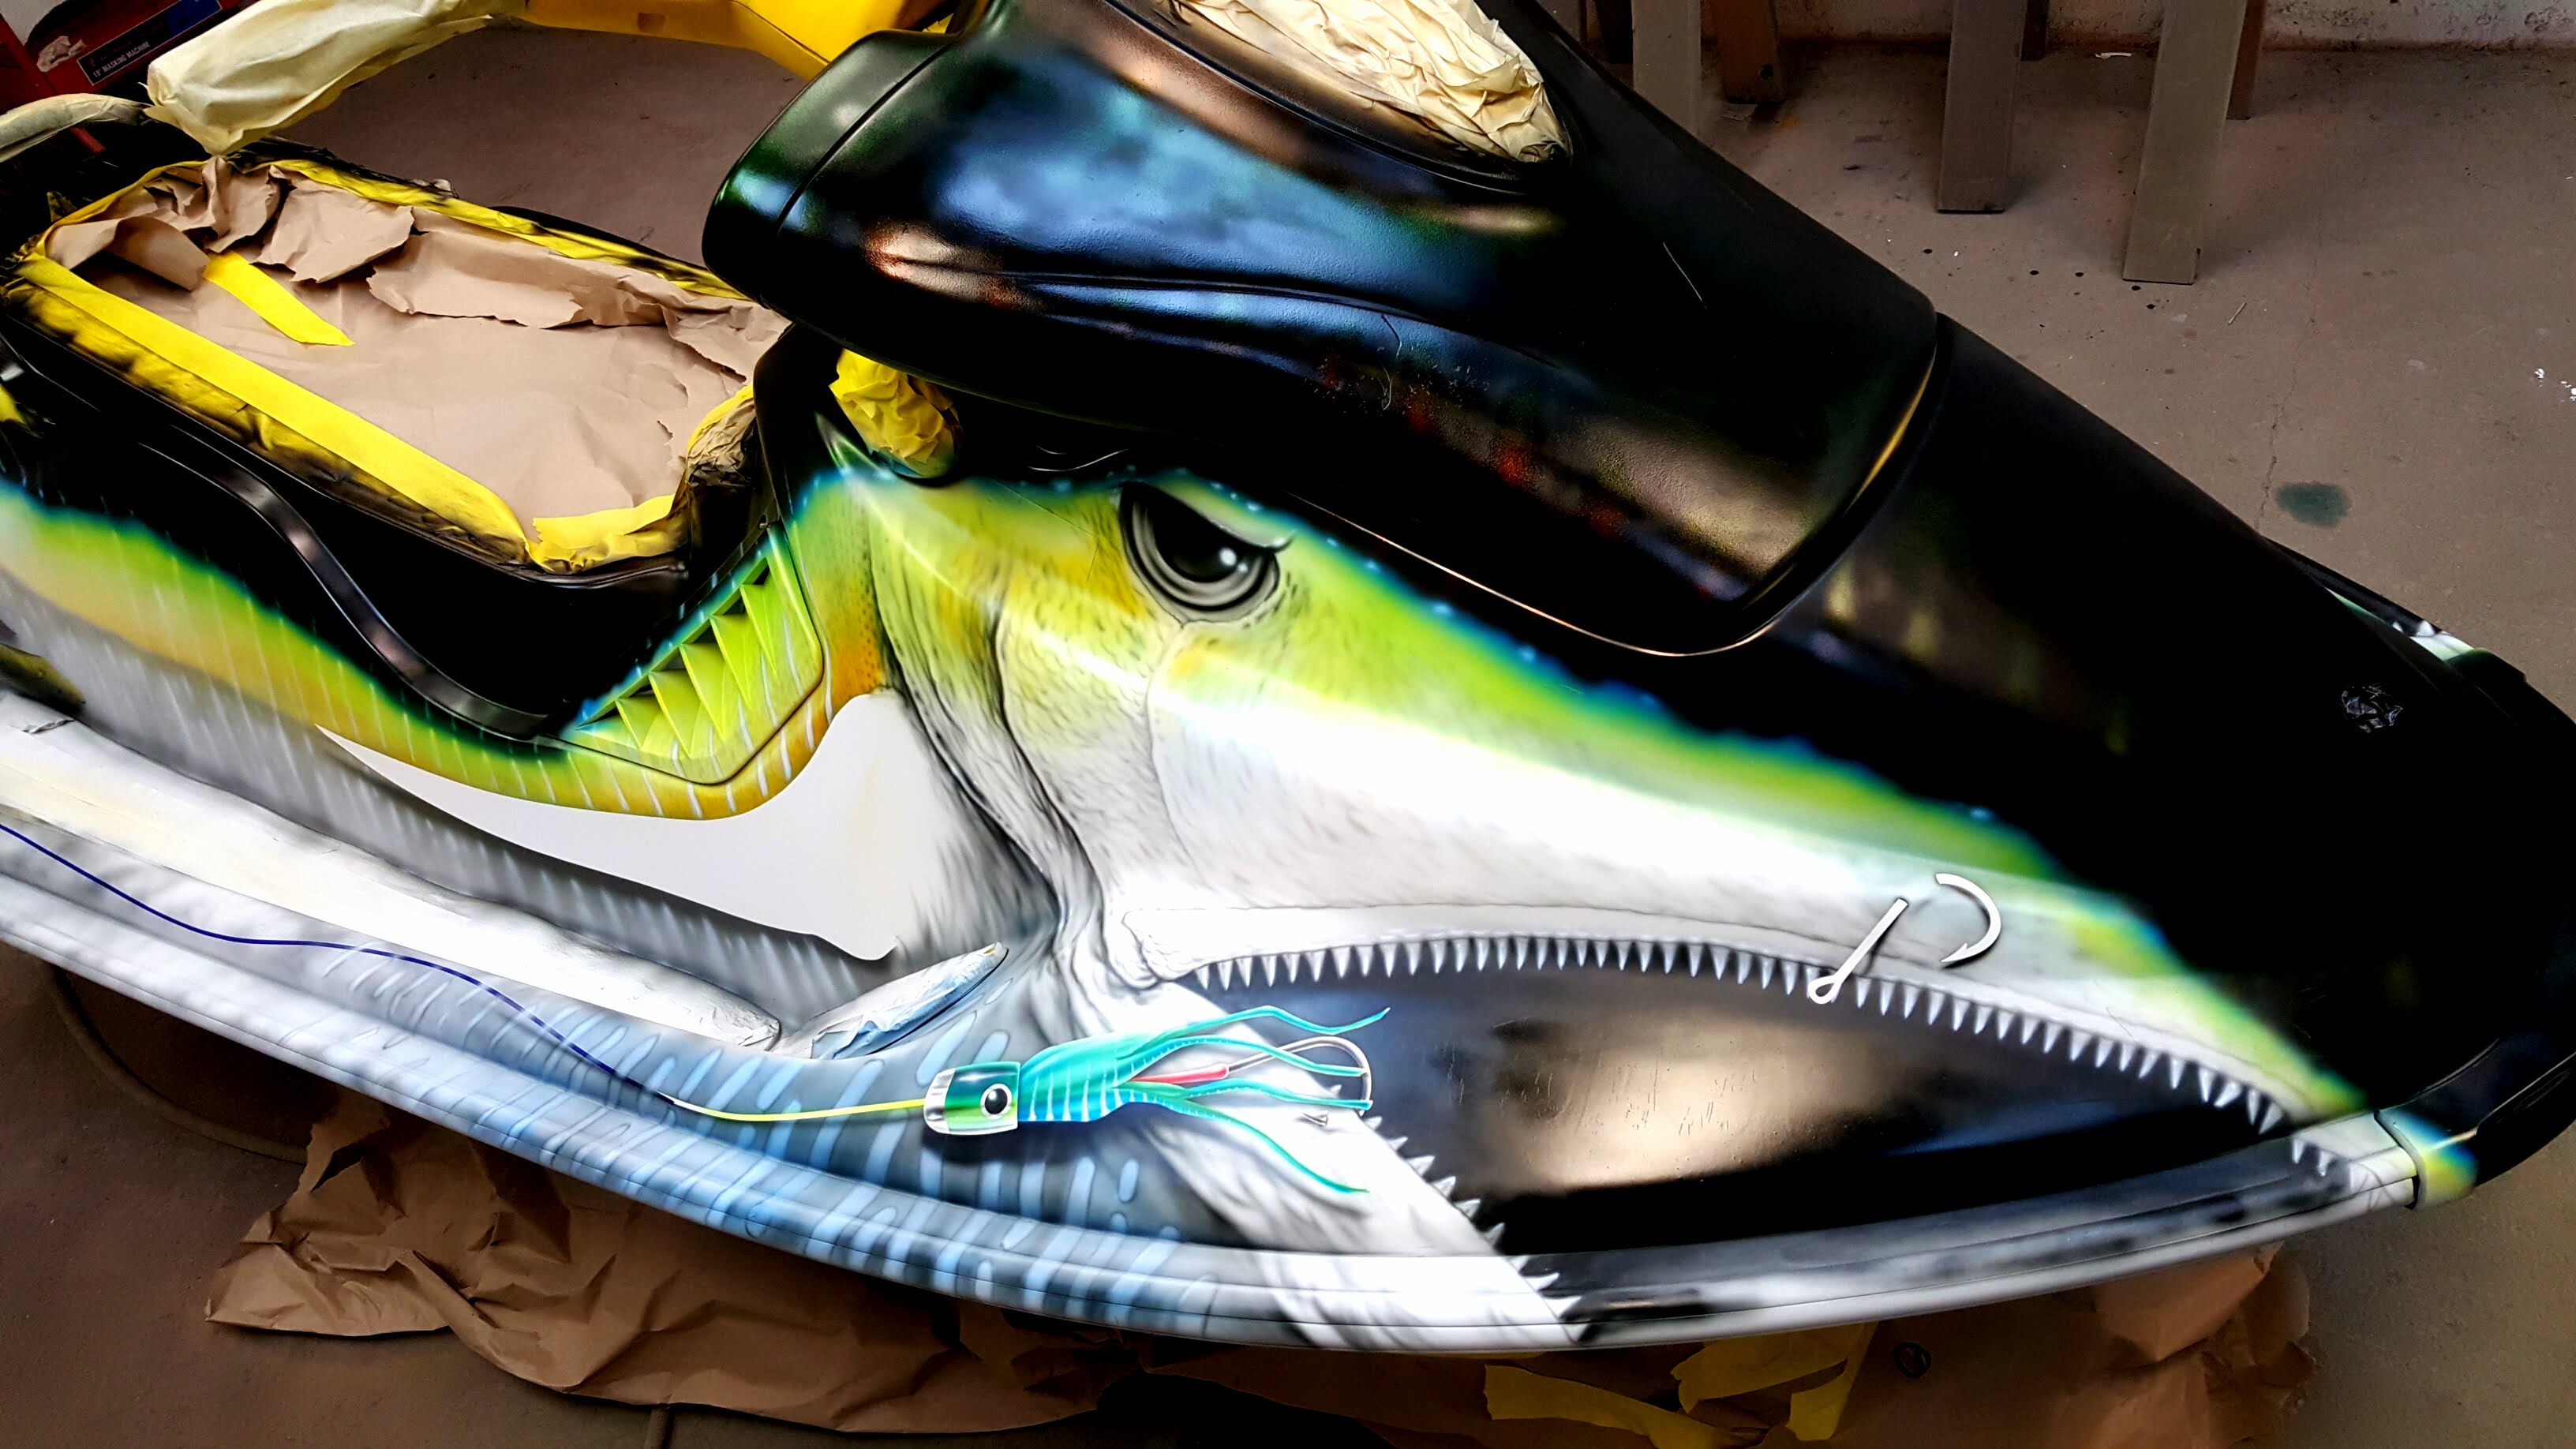 custom paint job of shark on jet ski in Maryland.